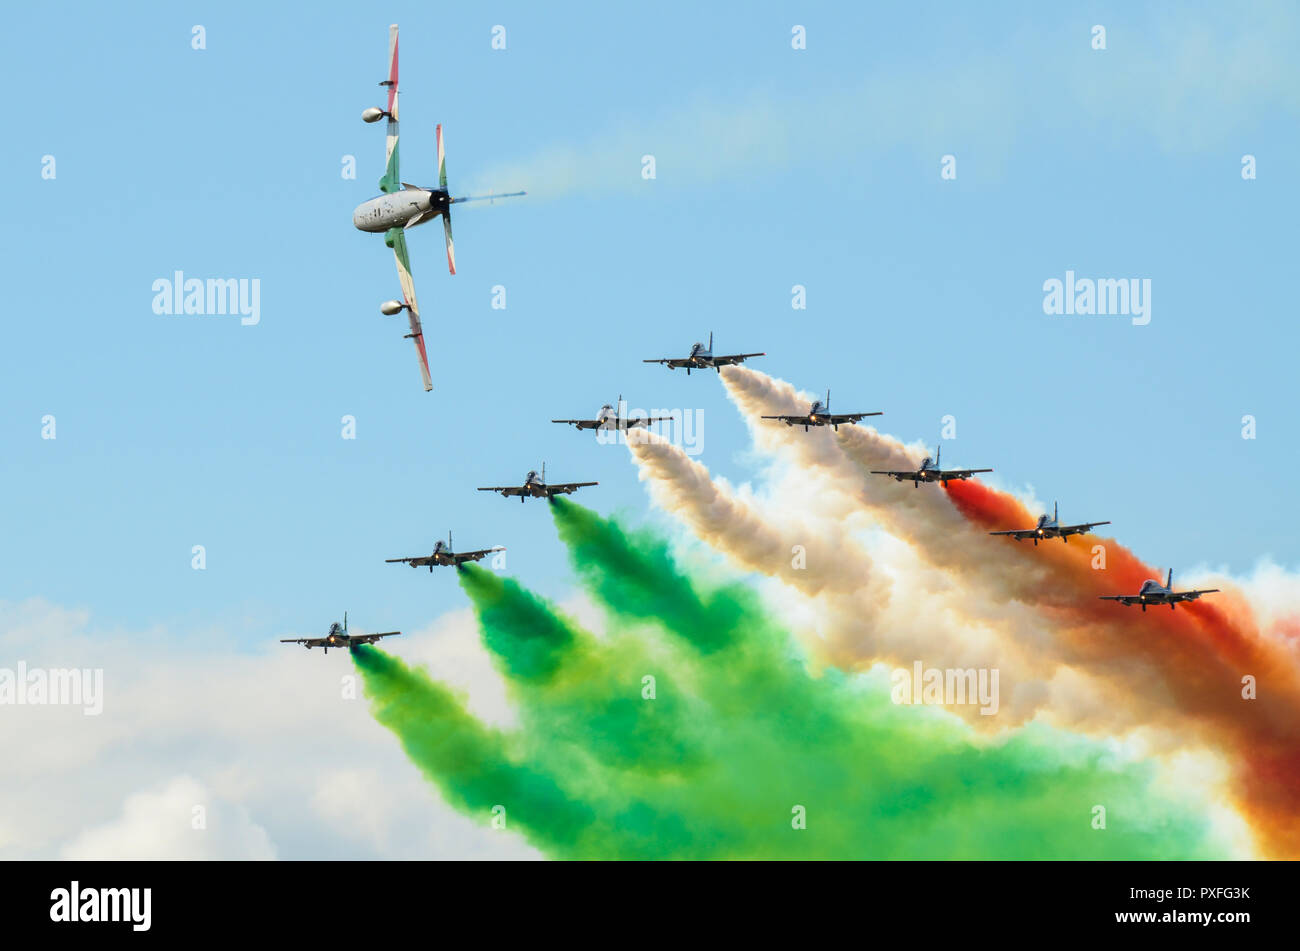 Frecce Tricolori, Tricolor Arrows, offiziell 313 Gruppo Addestramento Acrobatico, Kunstflugteam der italienischen Luftwaffe Aeronautica Militare. Anzeigen Stockfoto